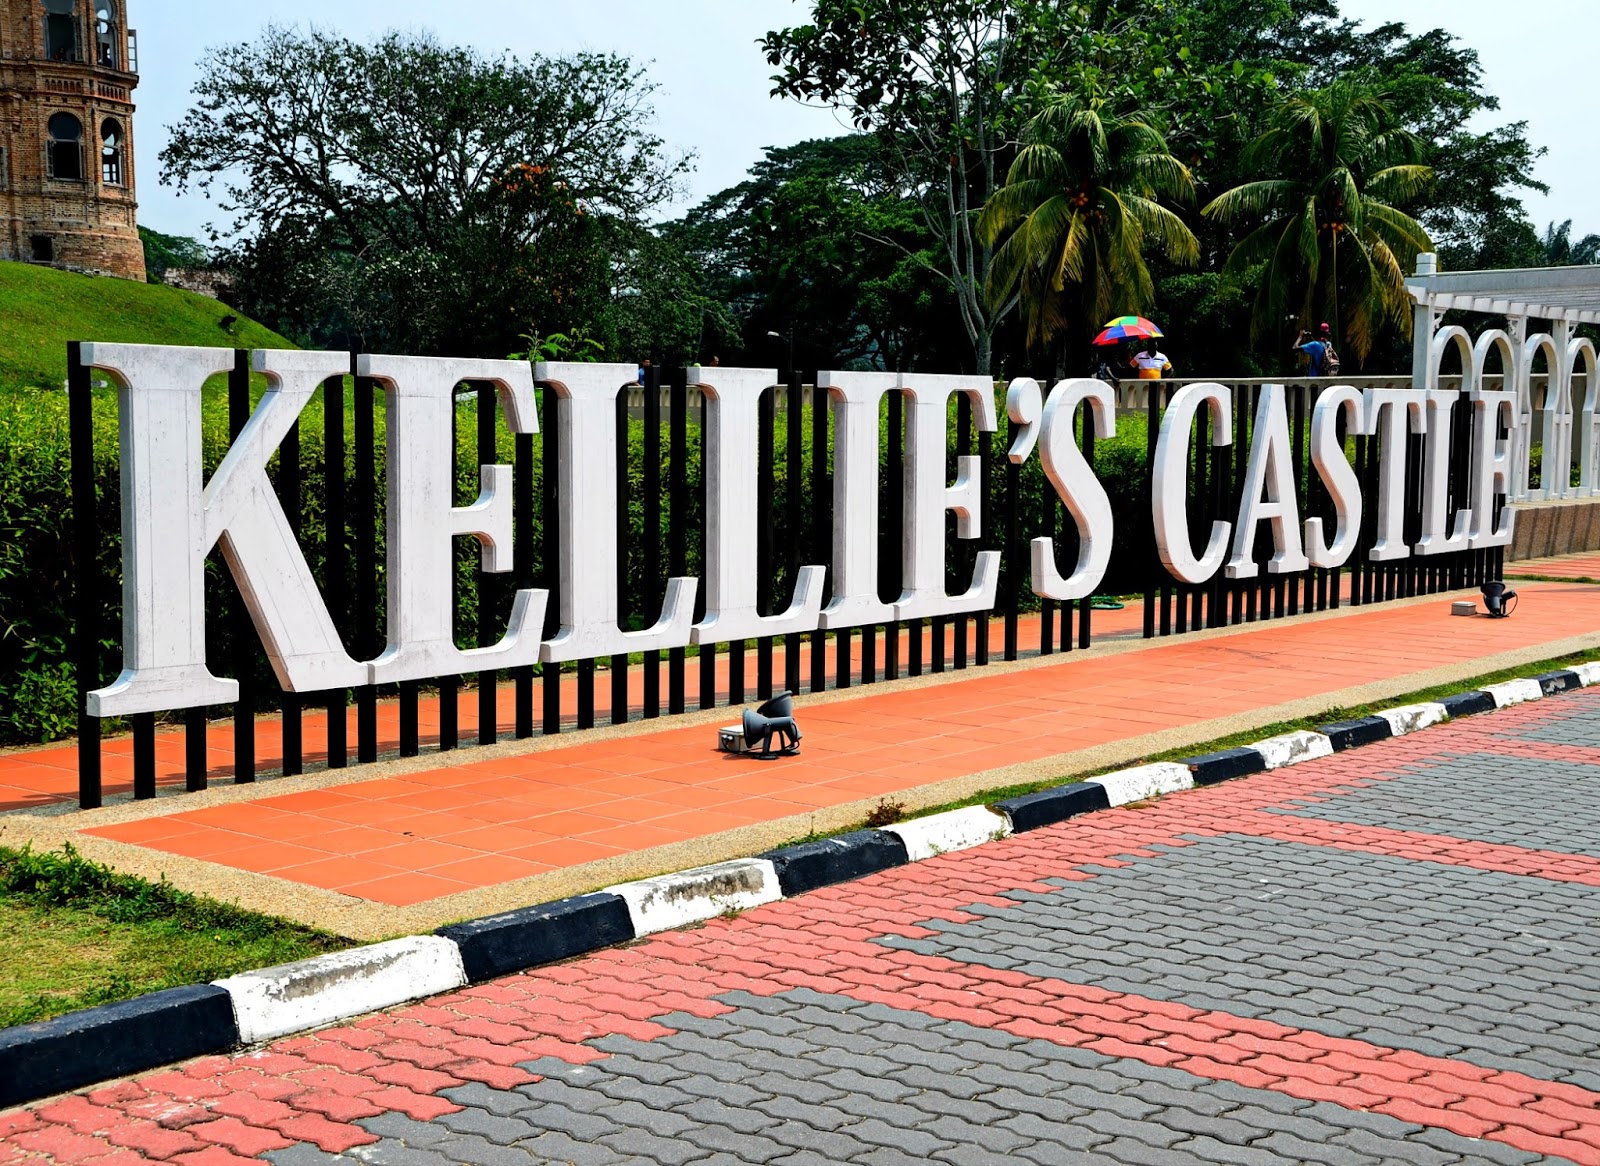 Ady Budika: Jalan-Jalan Ipoh - Part 2 "Kellie's Castle 